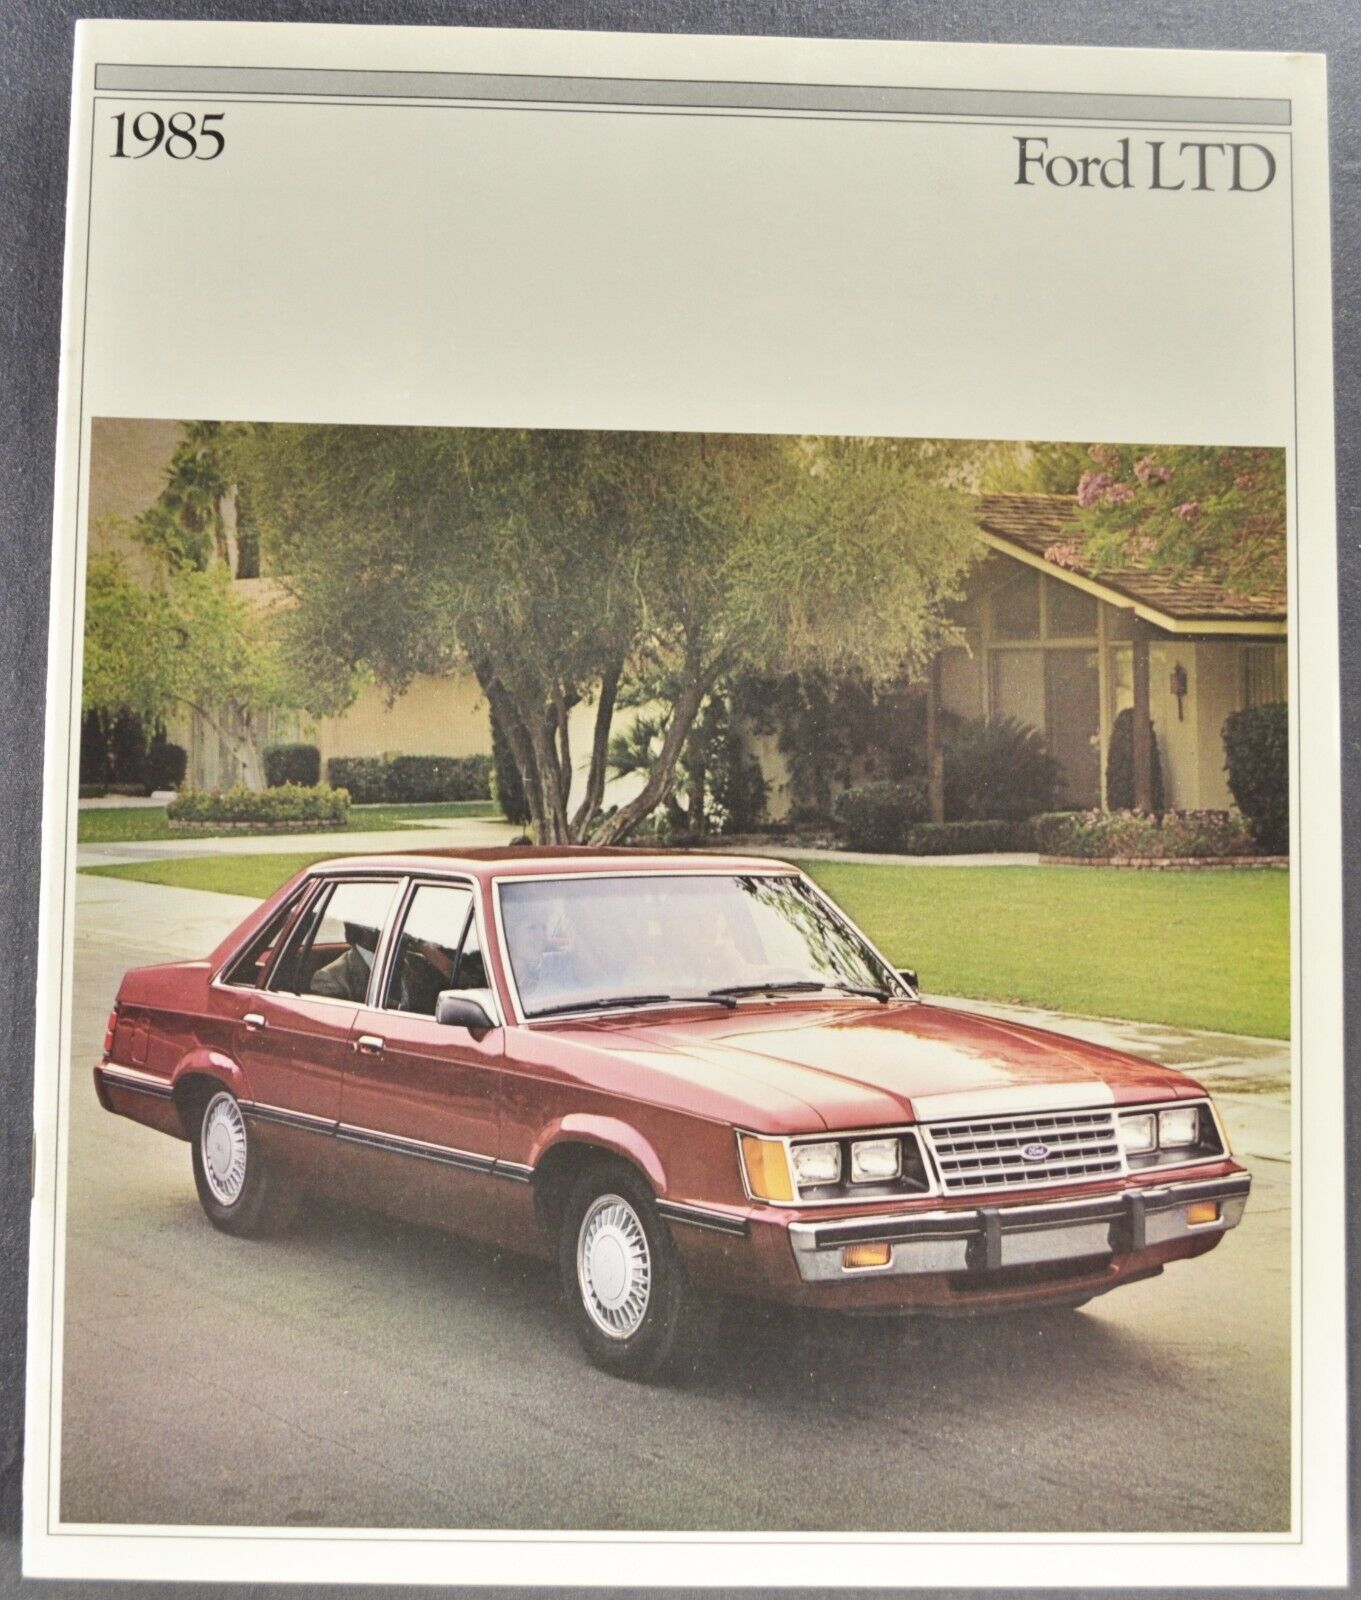 1985 Ford LTD Catalog Sales Brochure Brougham Sedan Wagon Excellent Original 85